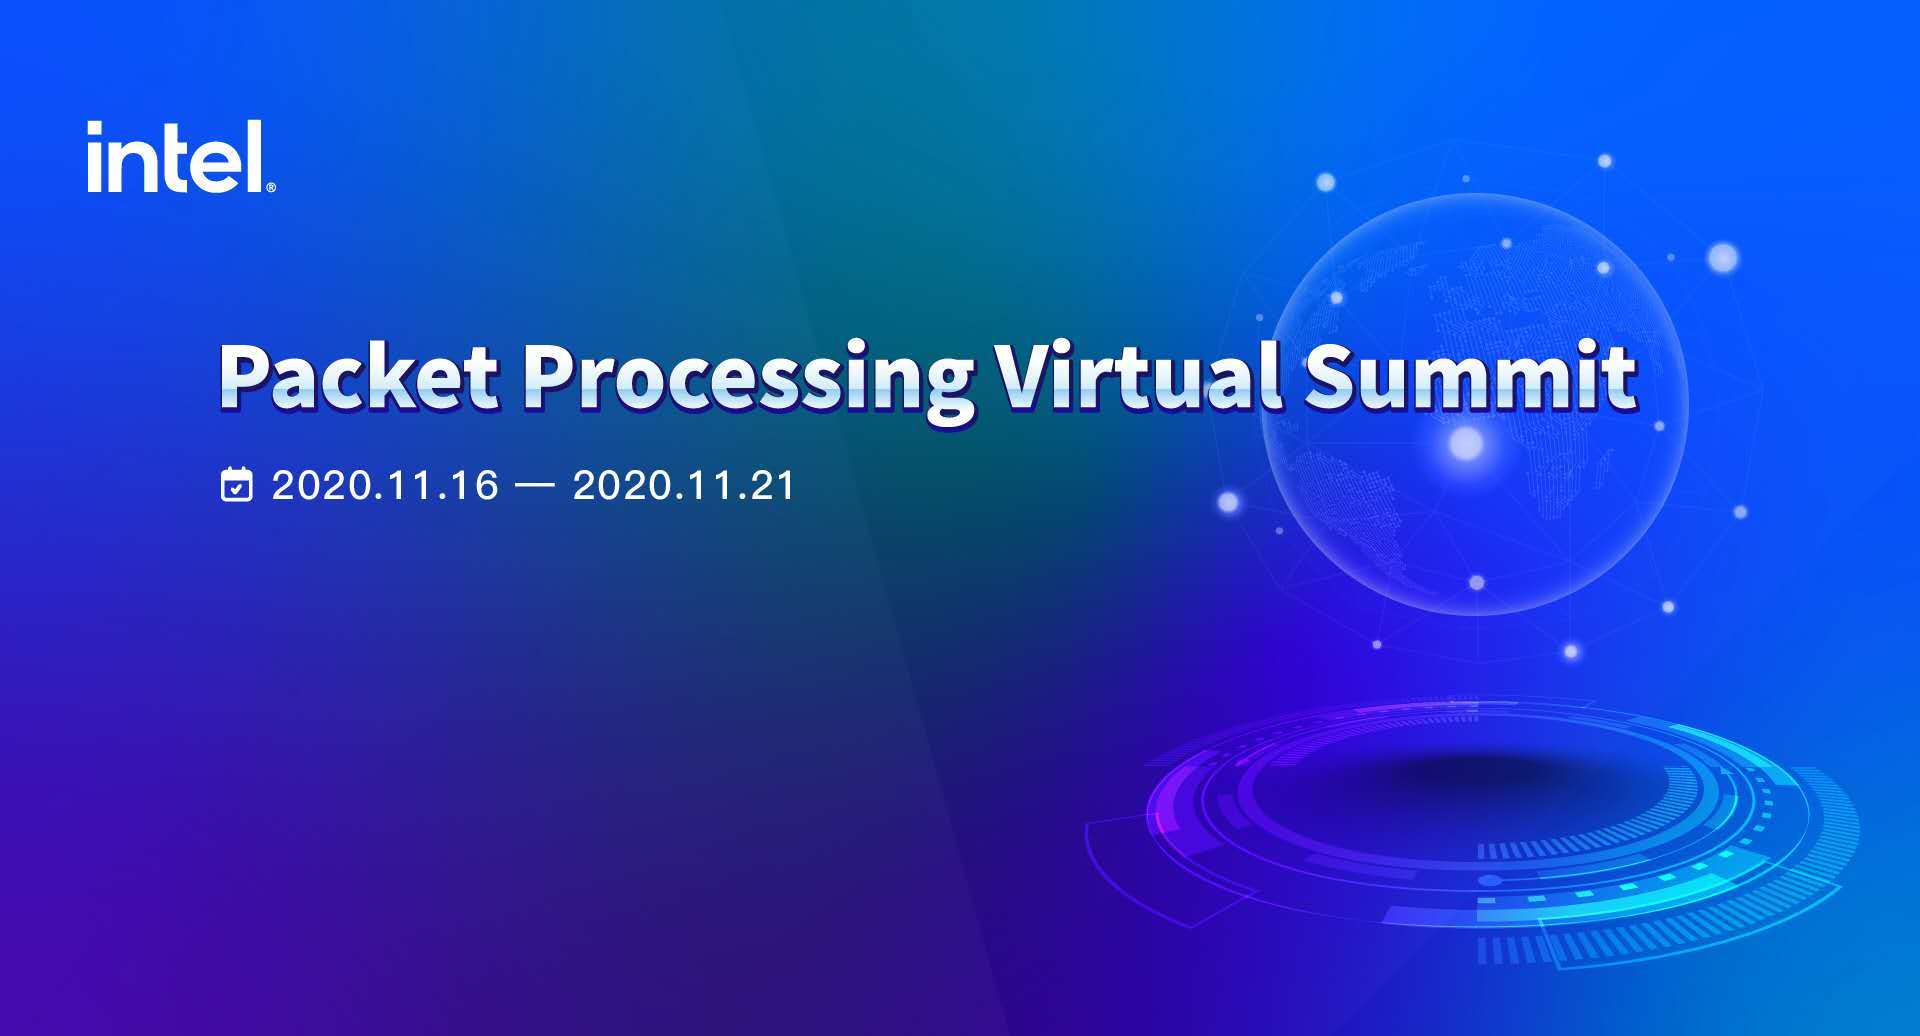 Packet Processing Virtual Summit